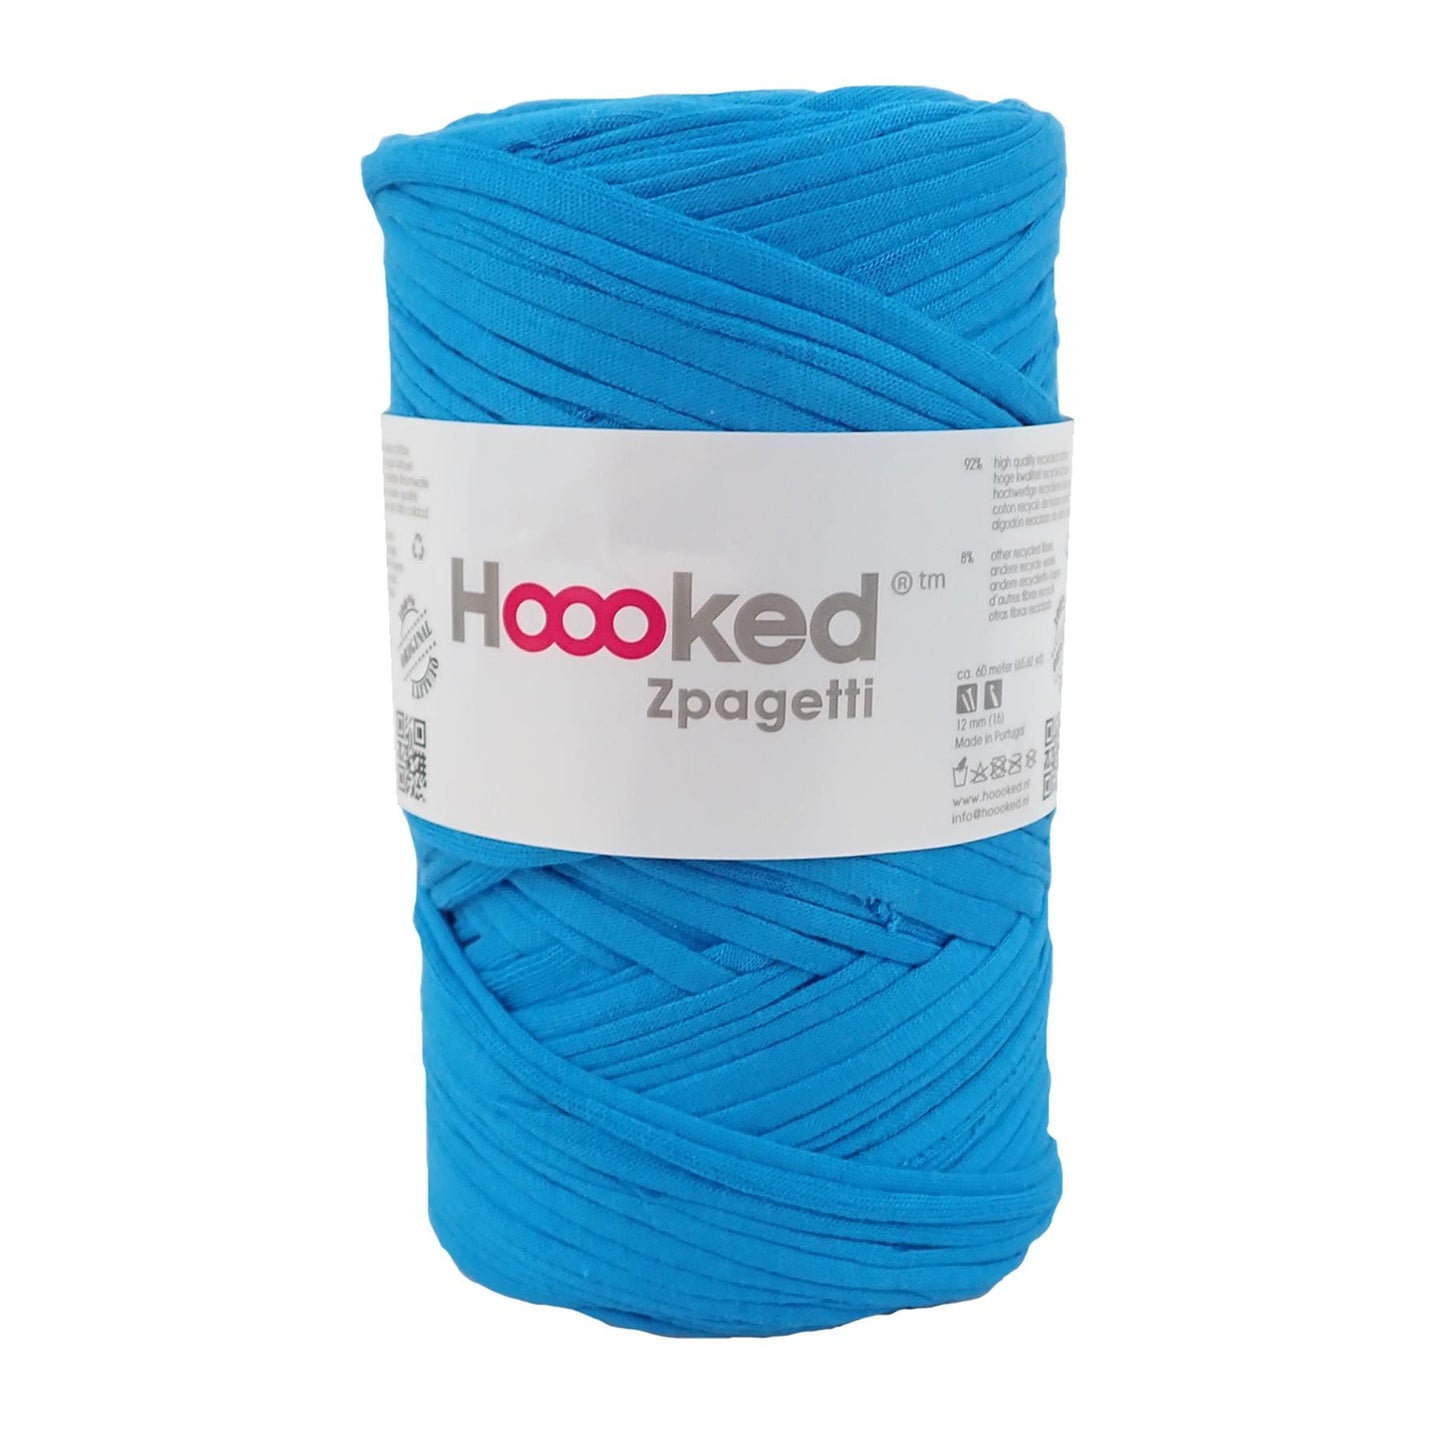 Hoooked Zpagetti Sky Blue Cotton T-Shirt Yarn - 60M 350g